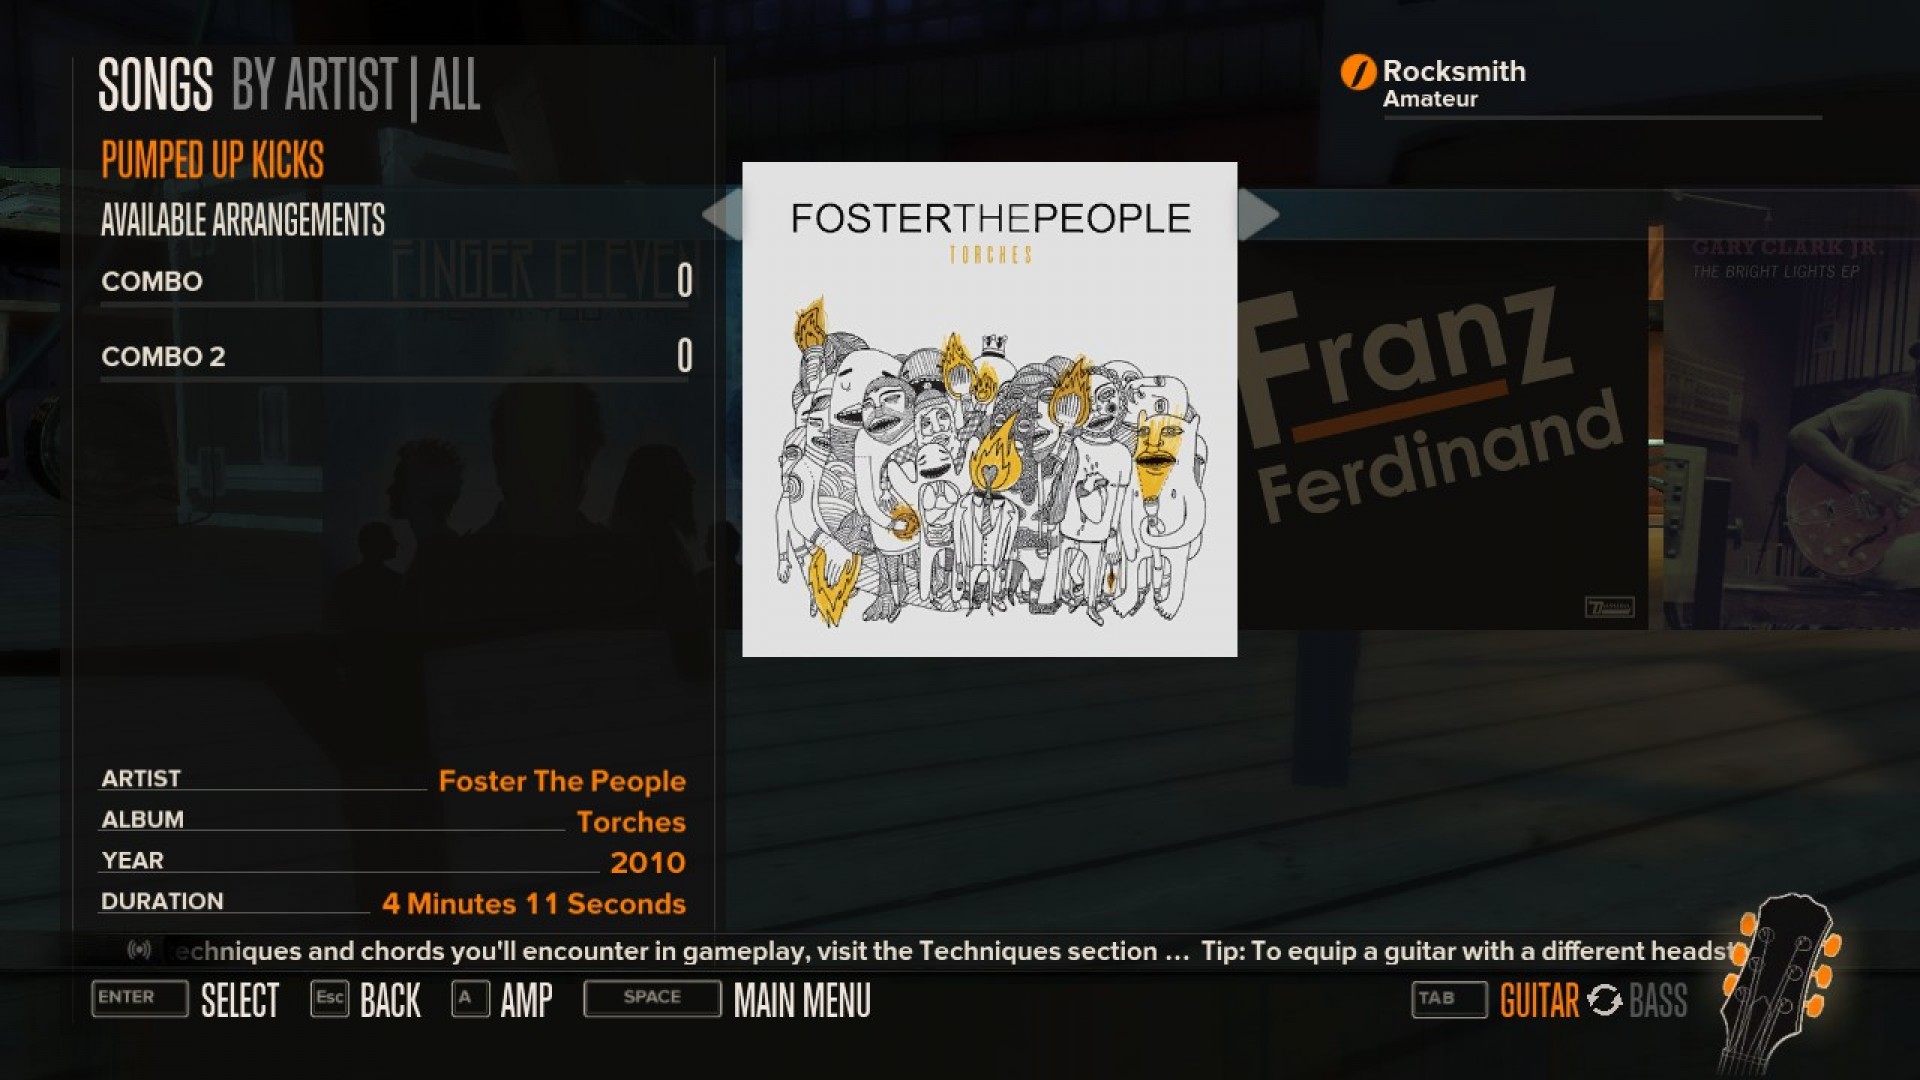 Rocksmith - Foster the People - Pumped Up Kicks screenshot